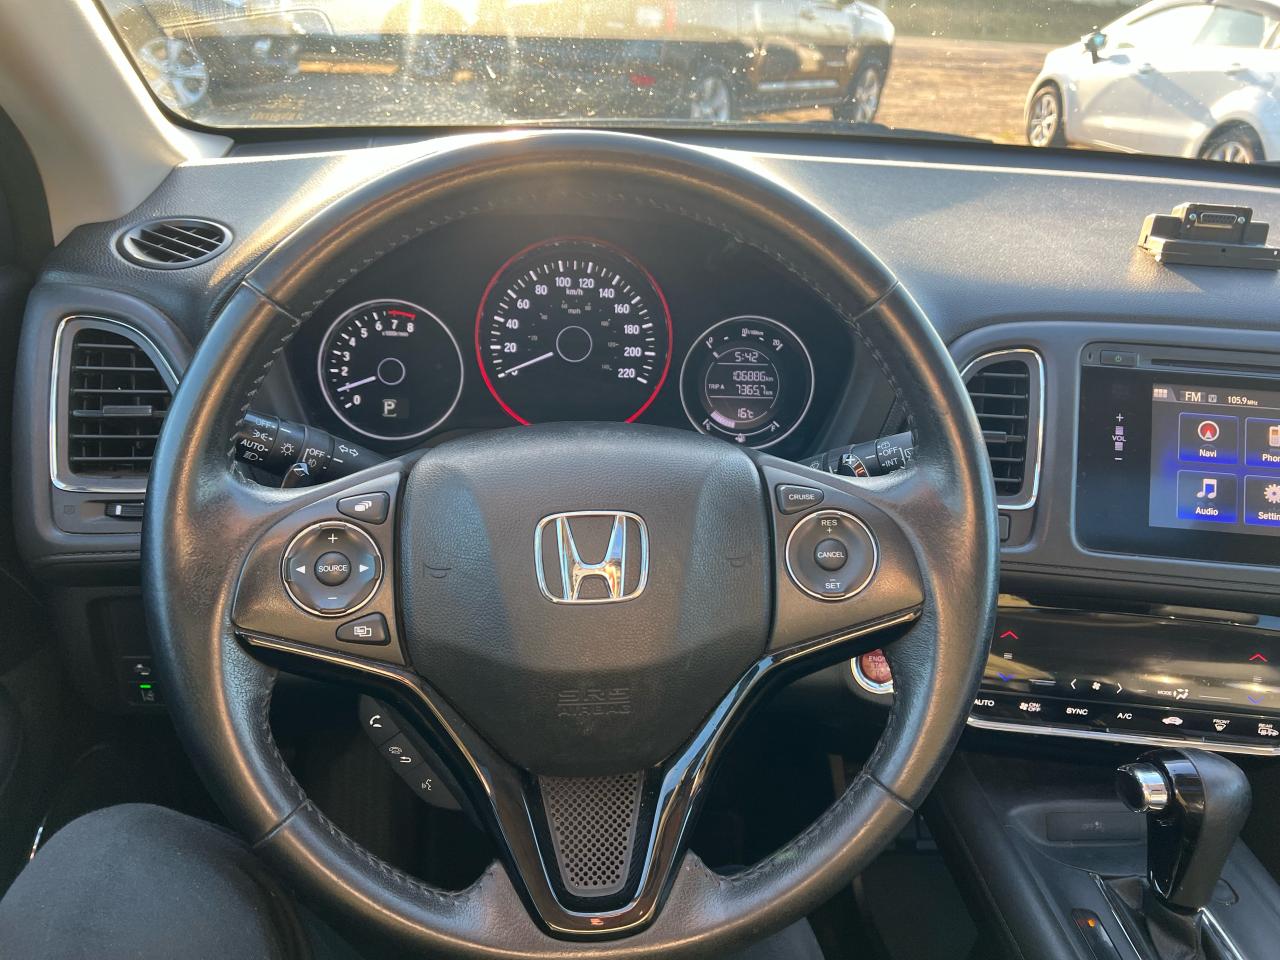 2018 Honda HR-V EX-L Navi AWD, Leather, Sun Roof, Lane Assist + - Photo #23